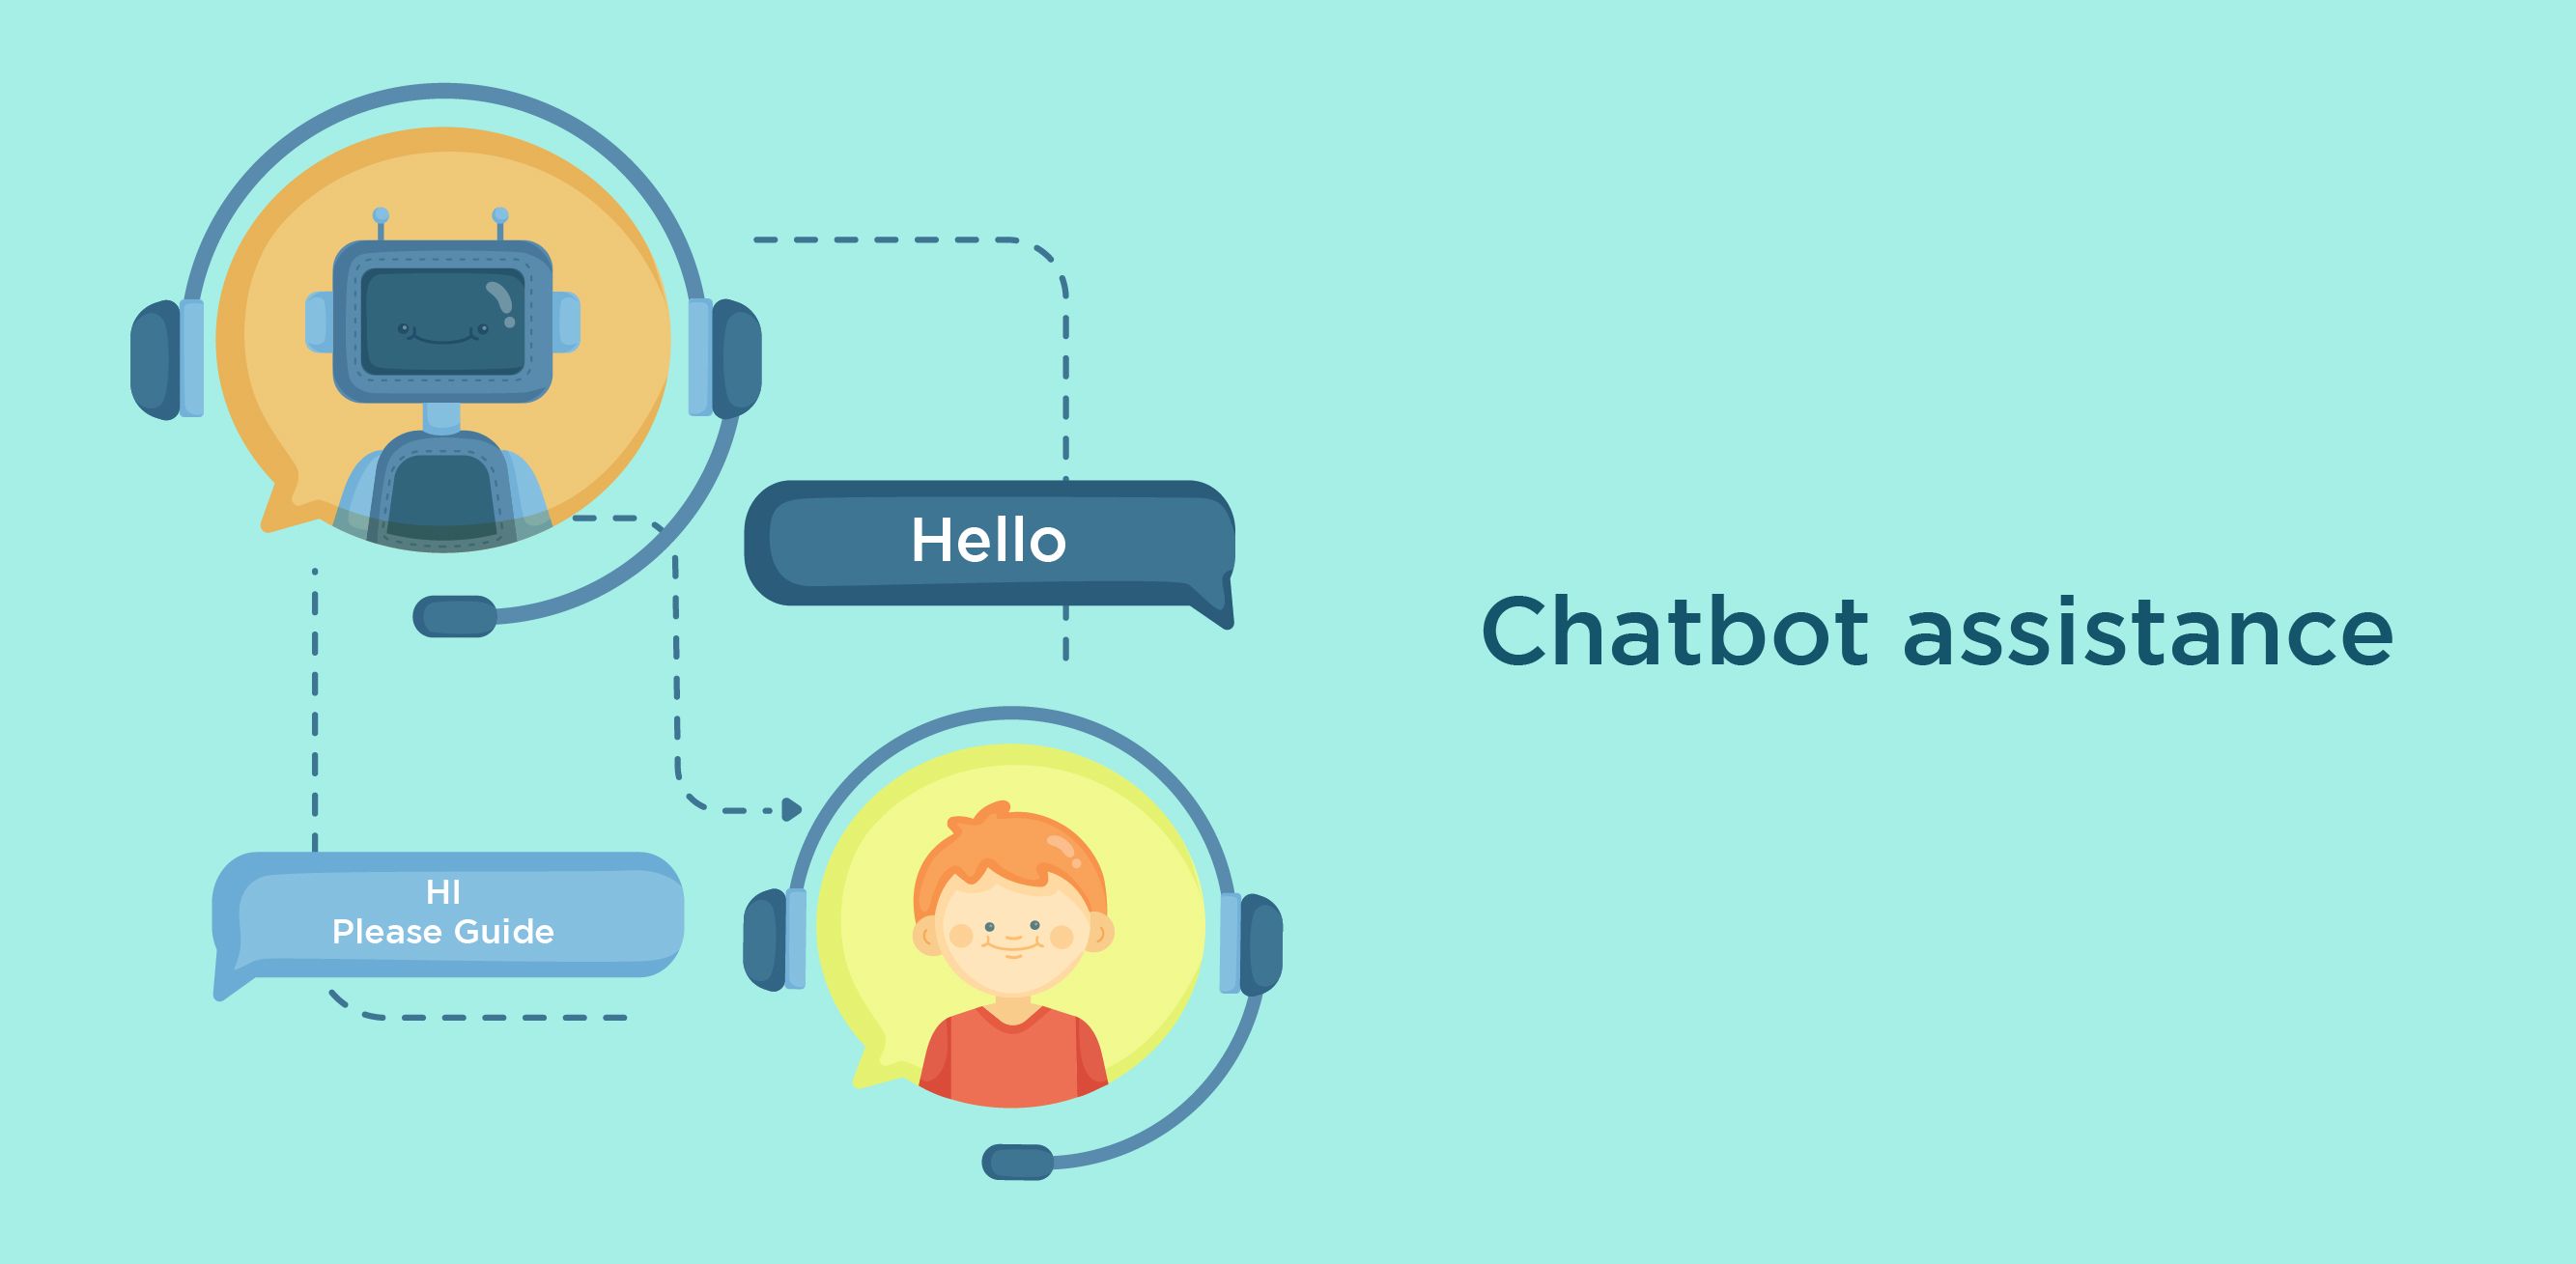 Chatbot assistance